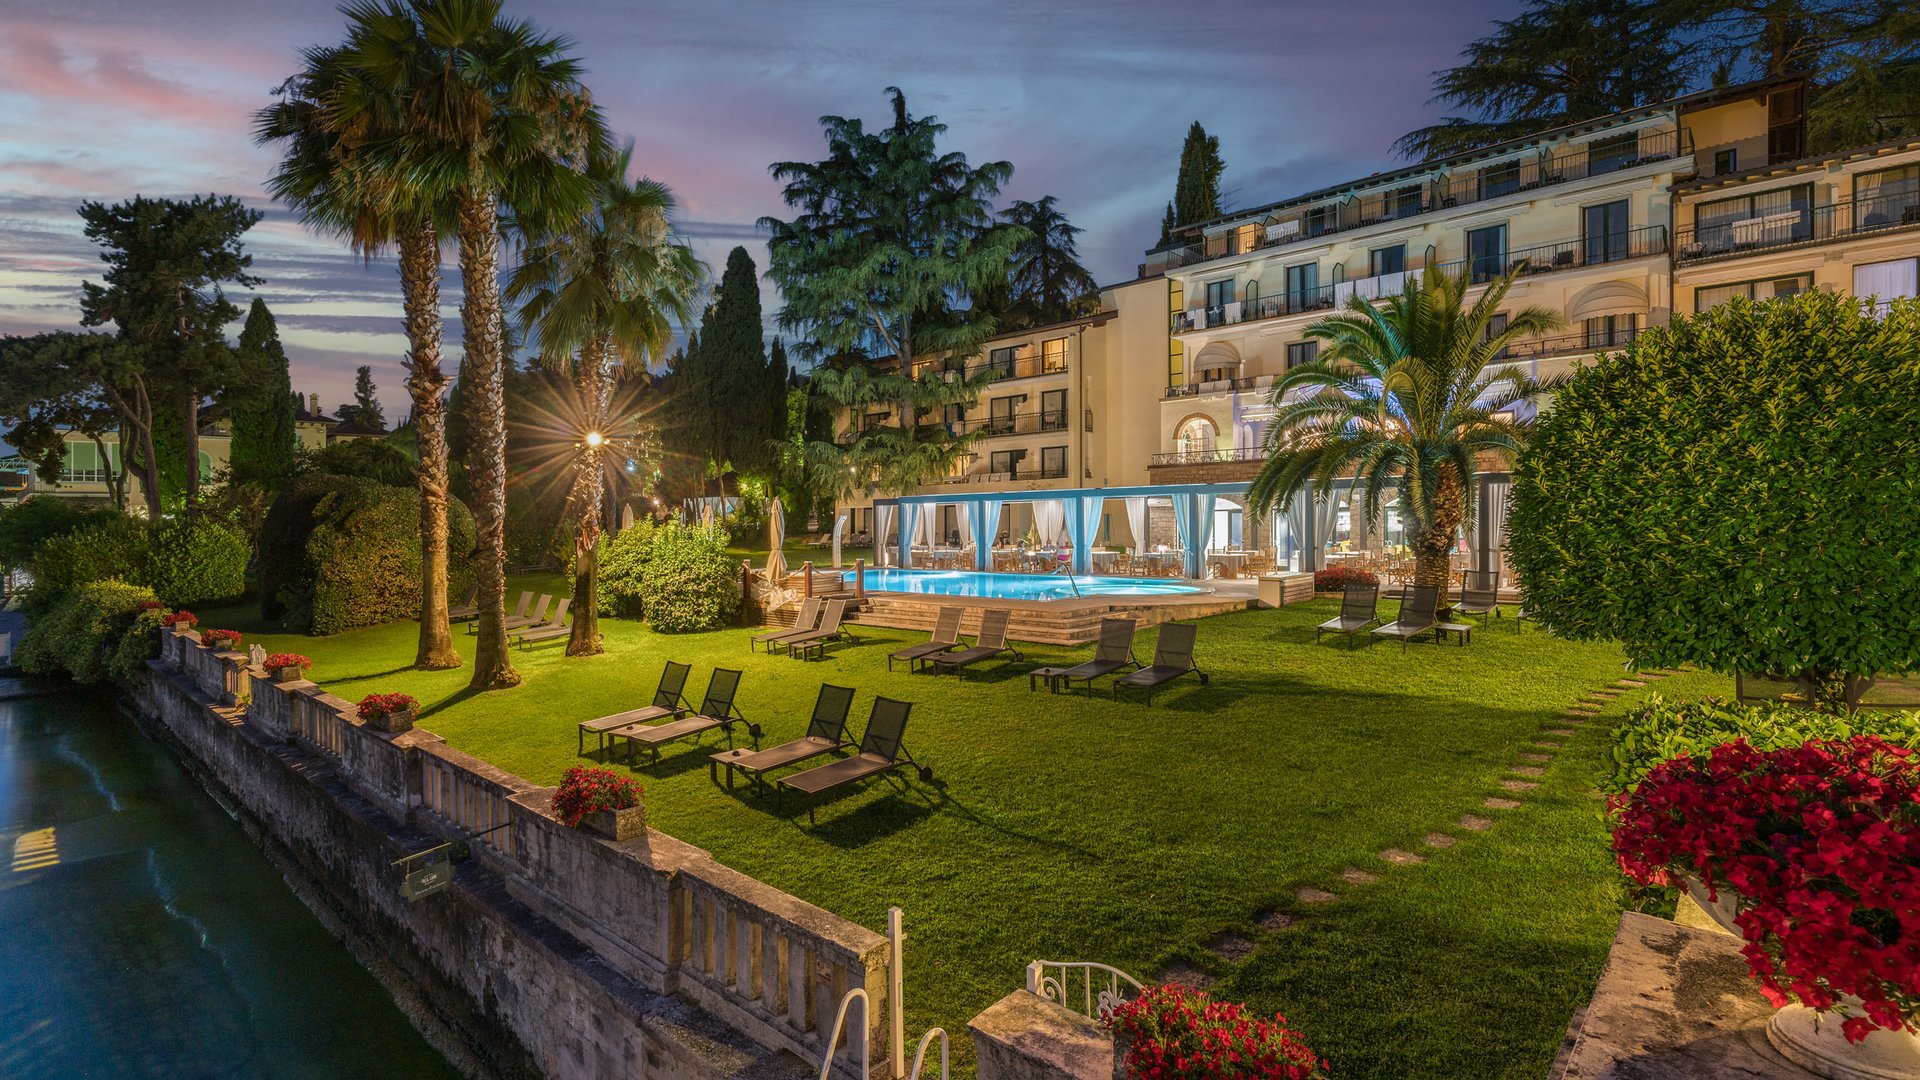 Charming hotel on Lake Garda with pool and lake view